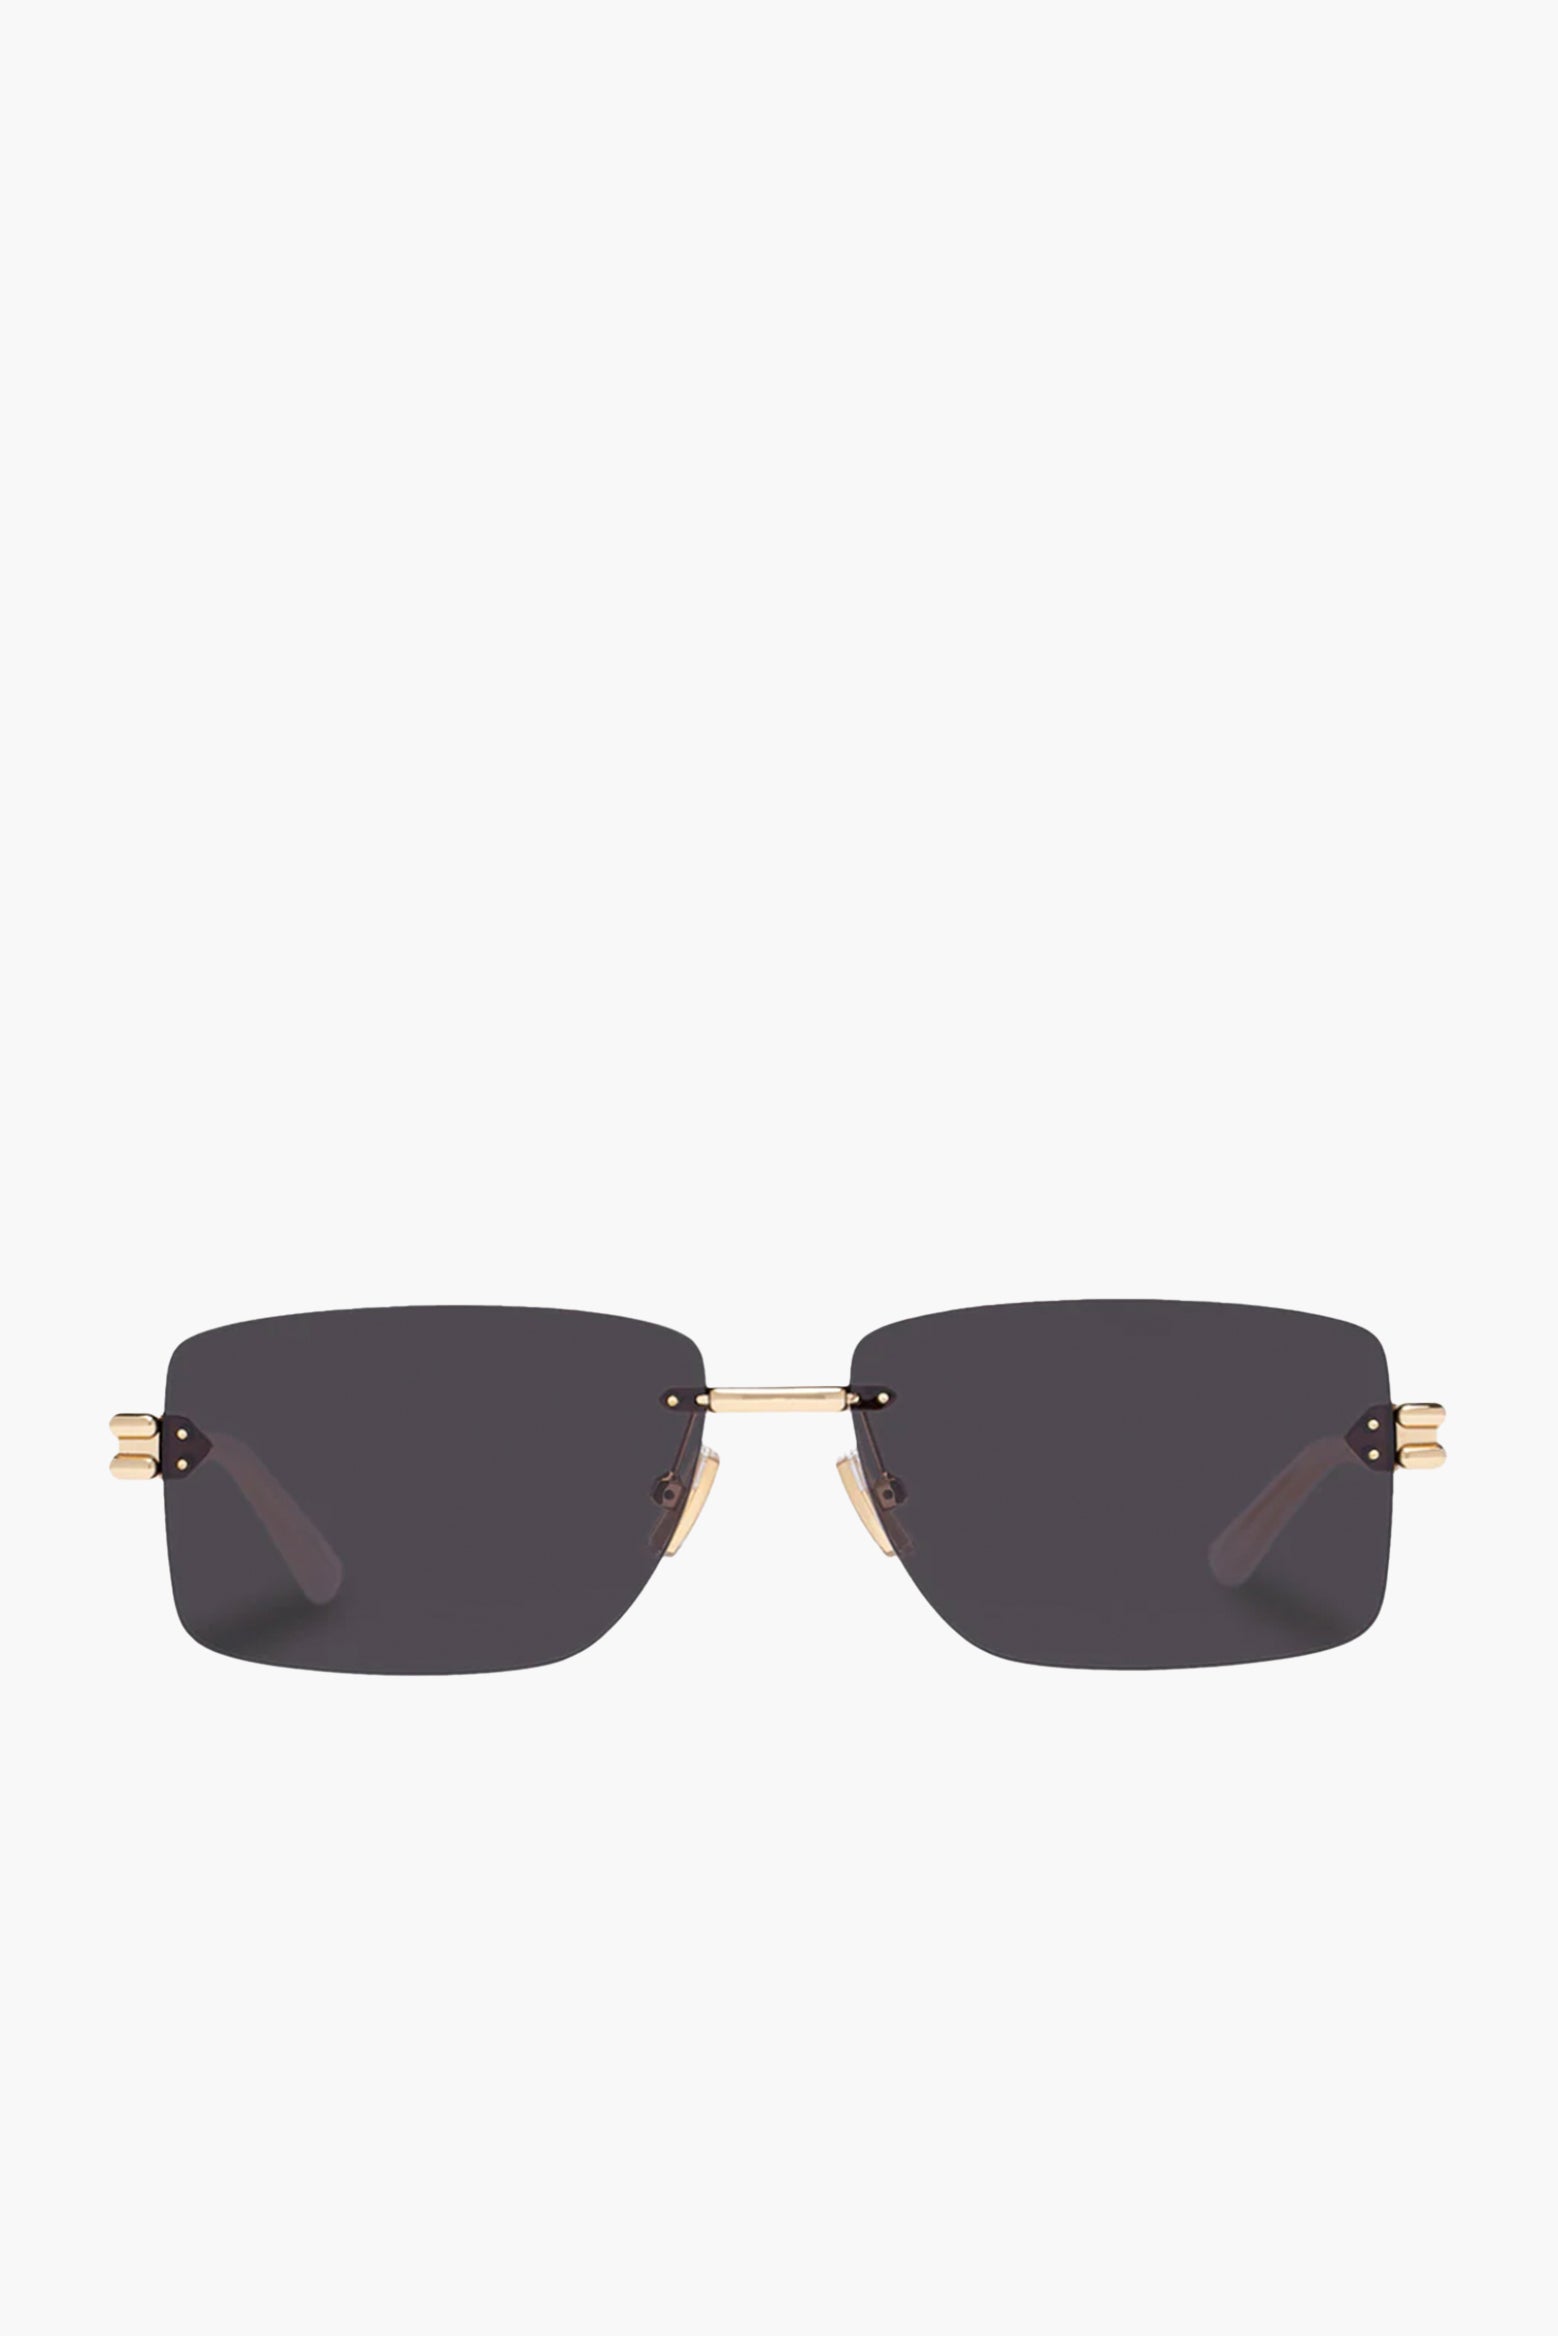 Bottega Veneta Rectangle Metal Sunglasses in Gold available at The New Trend Australia.